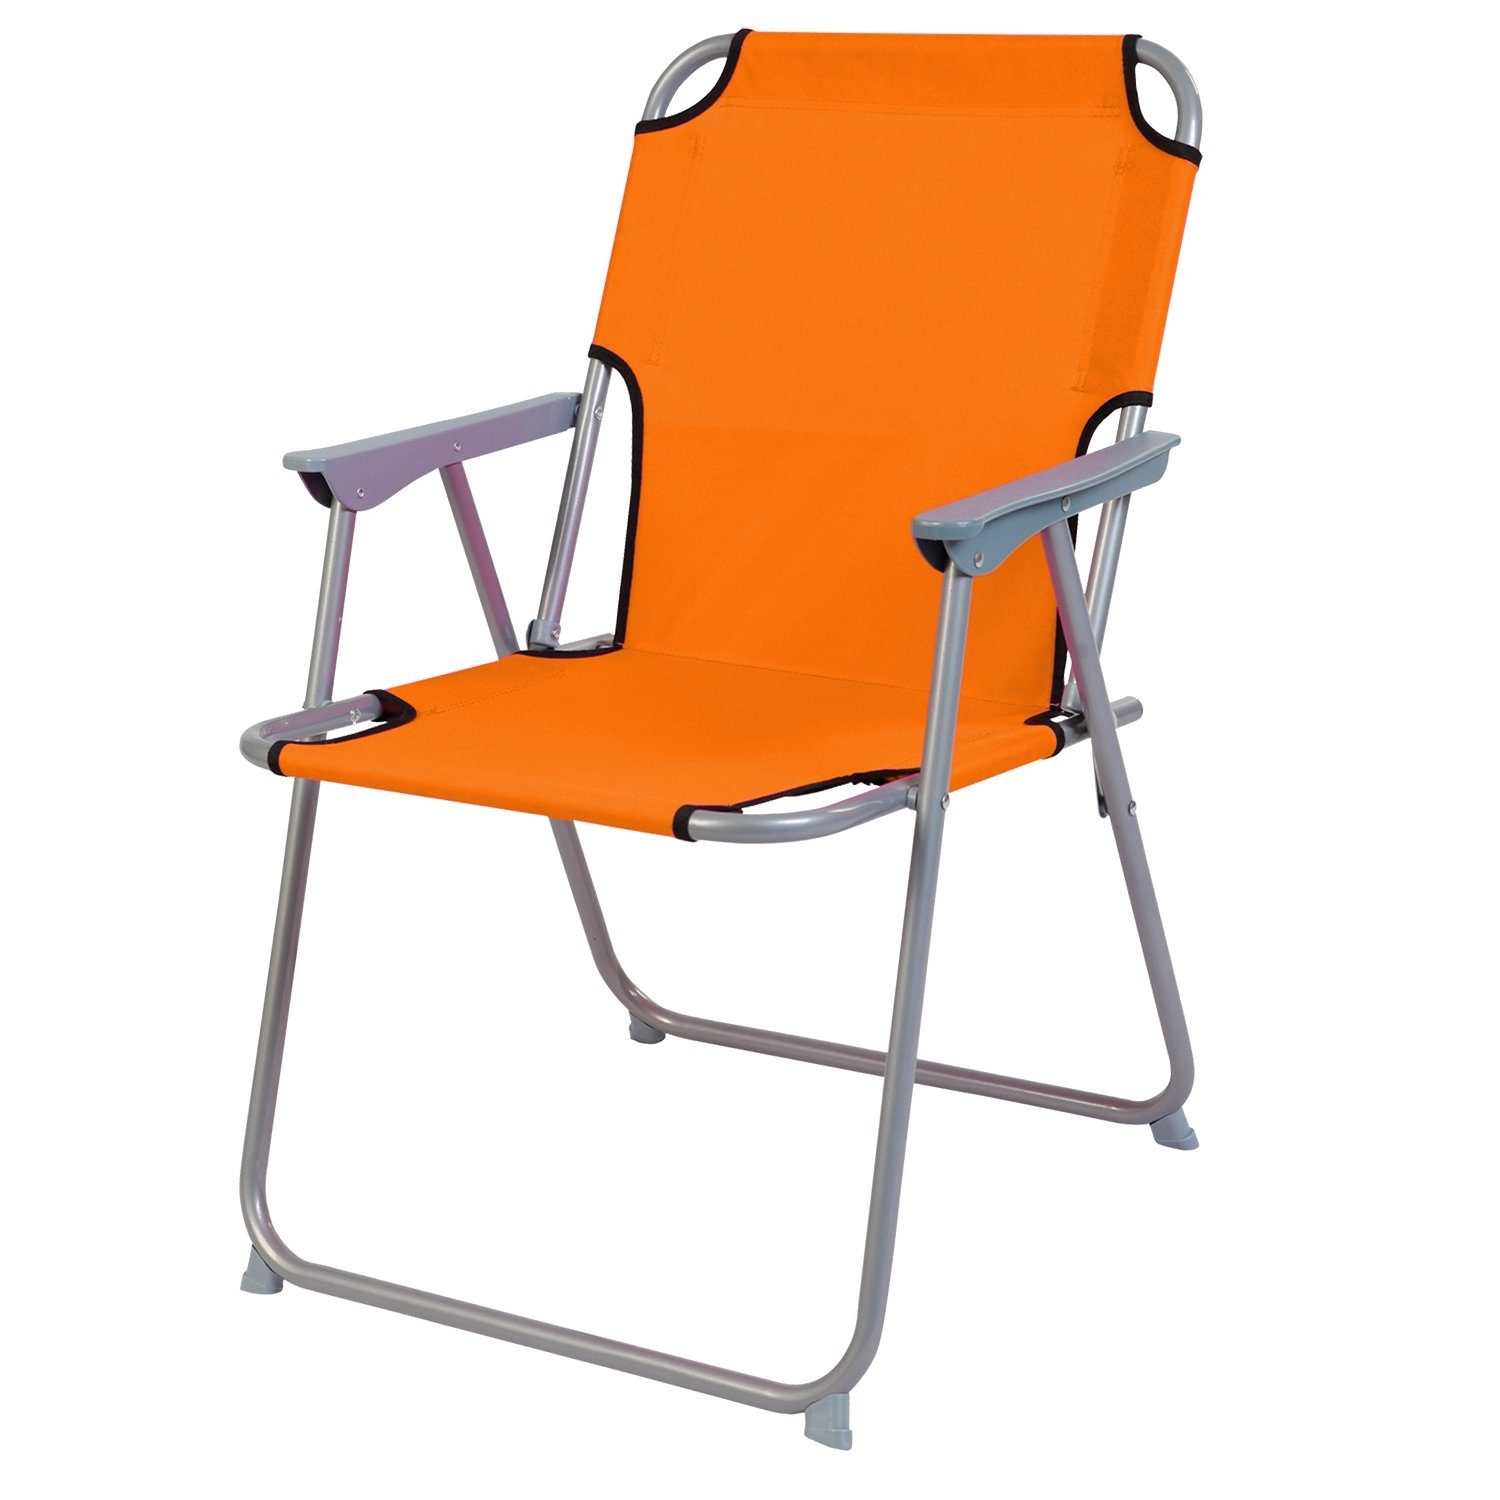 120x60x58/70cm Campingmöbel Alu Essgruppe 4-teiliges Set Mojawo orange Black